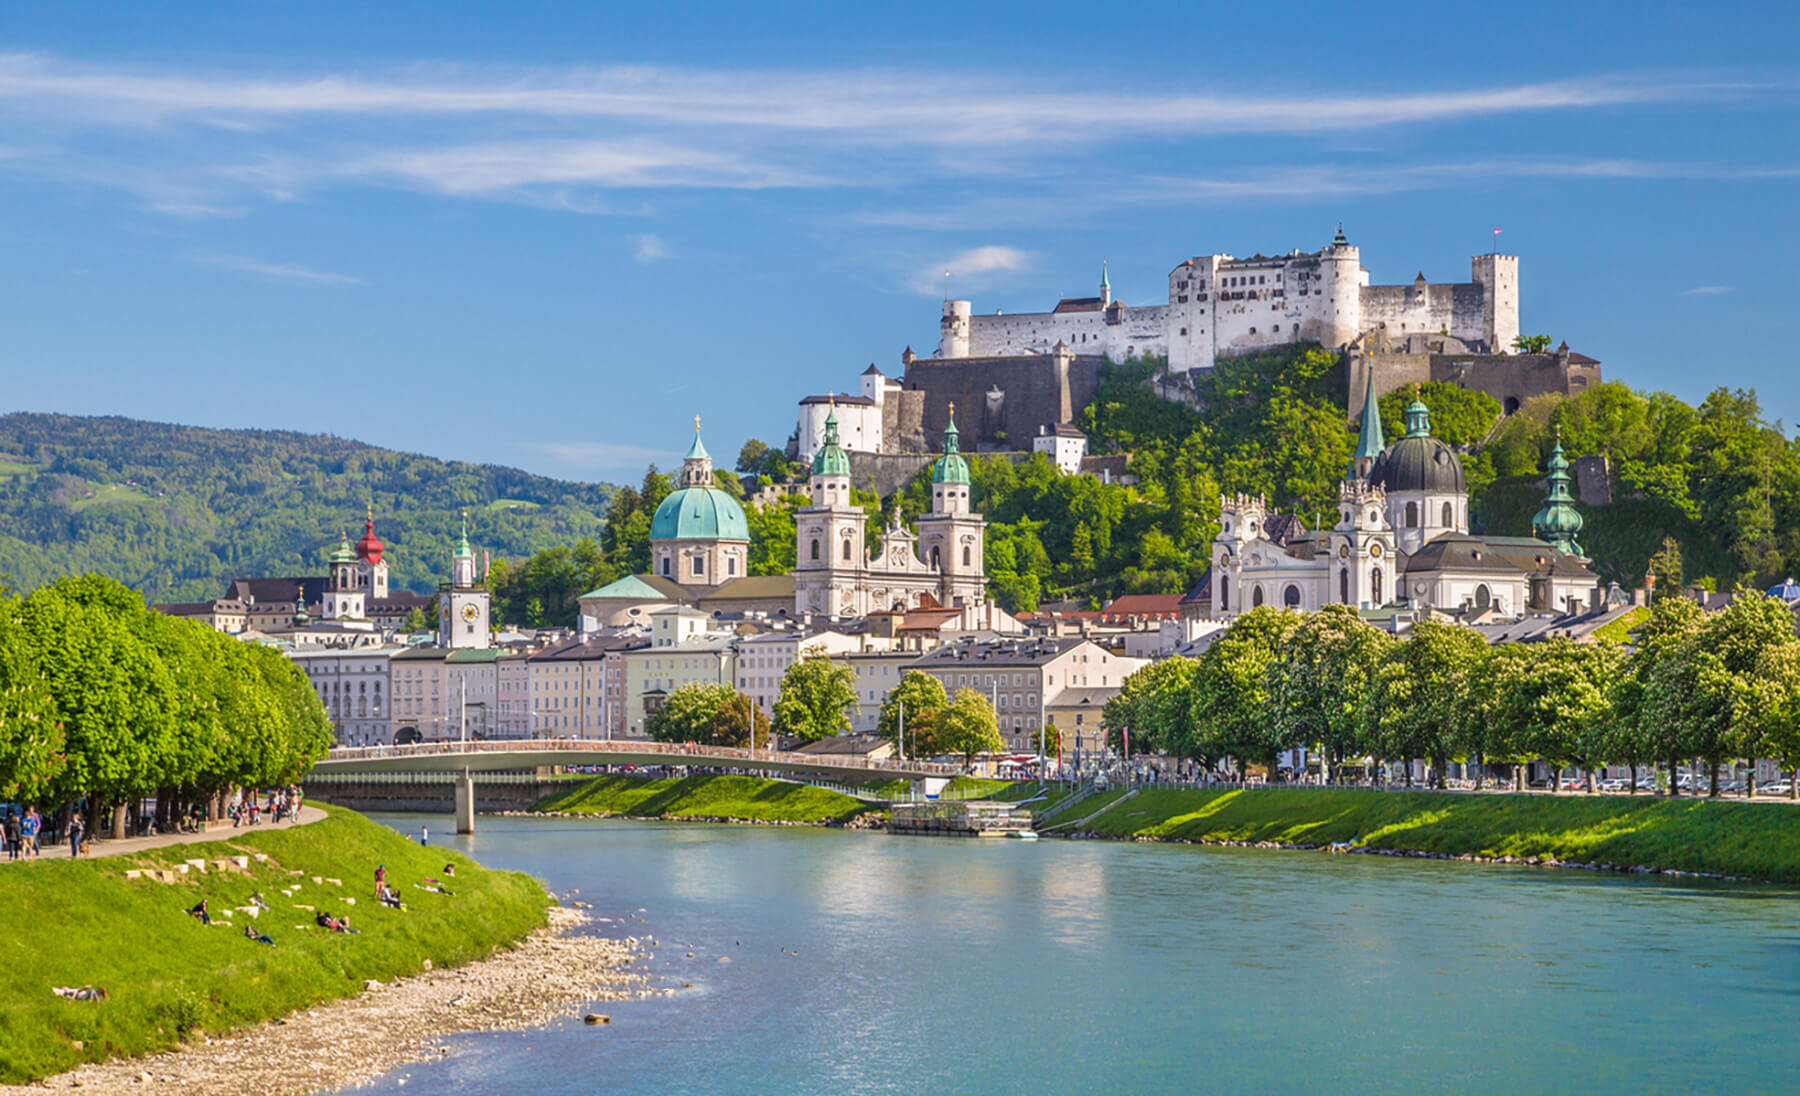 Salzburg’s River